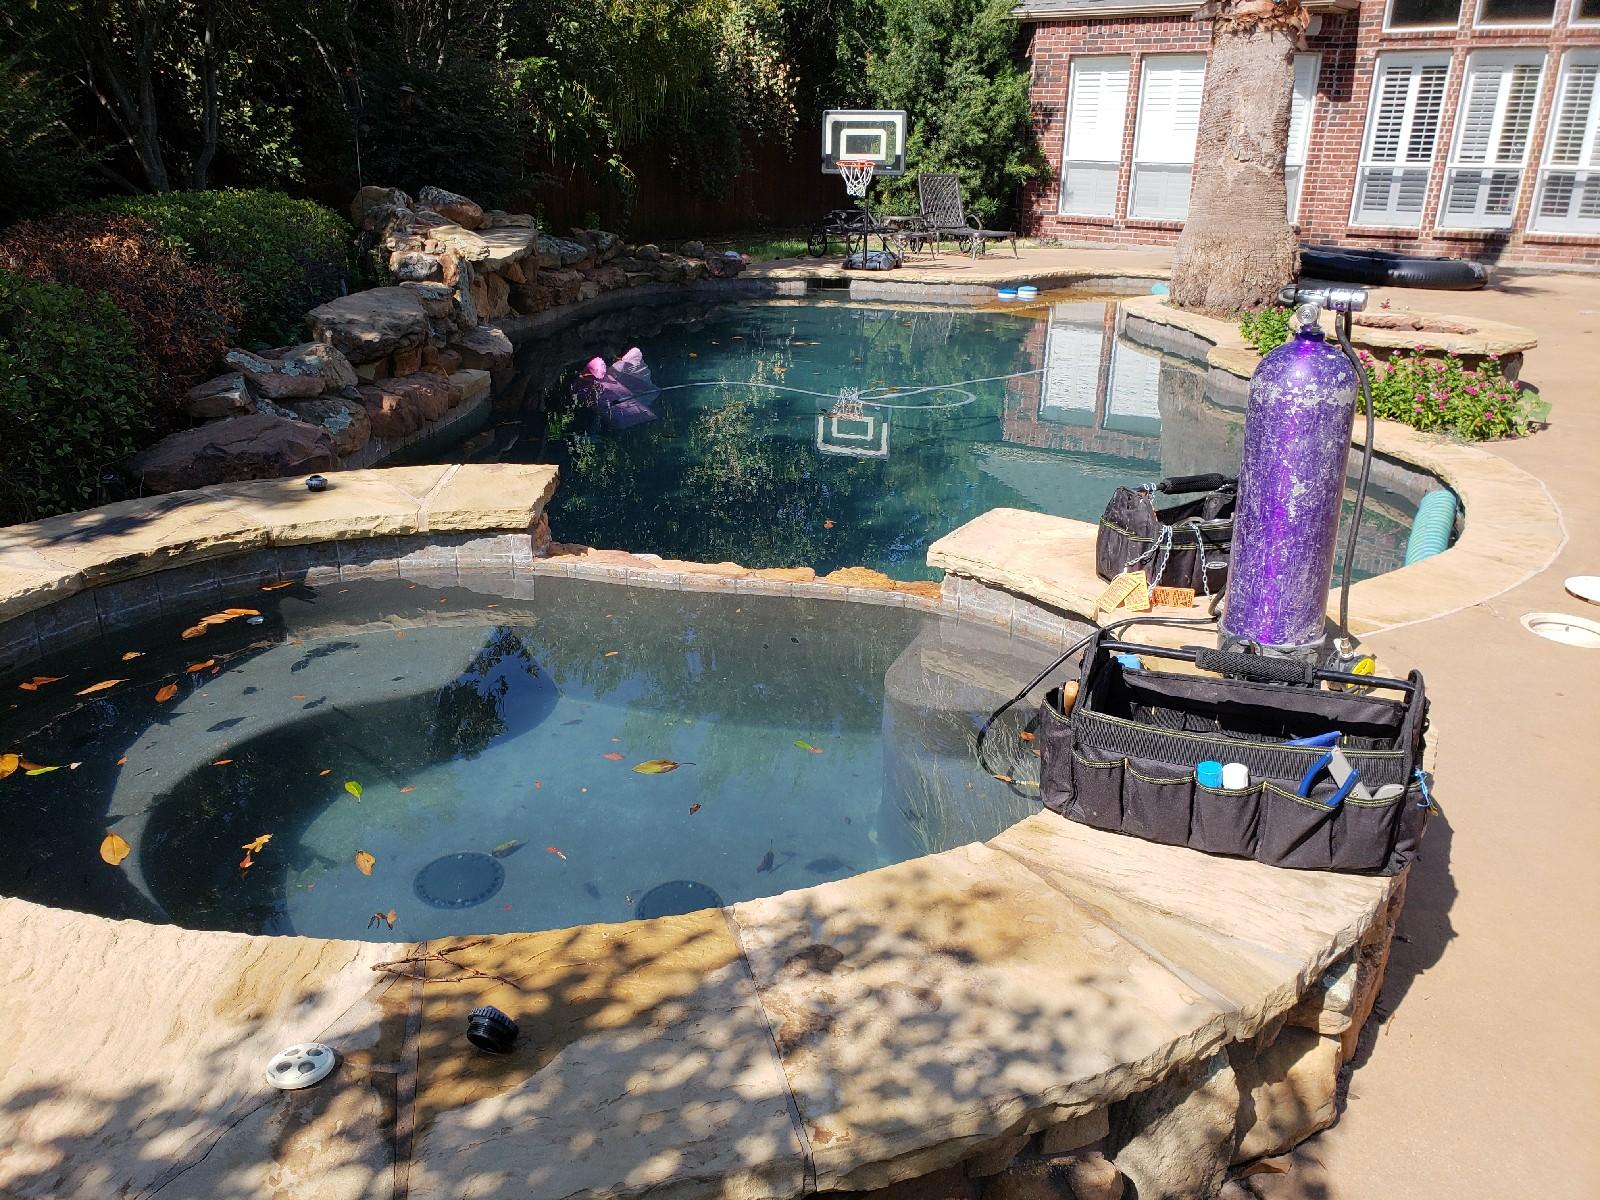 pool leak detection equipment